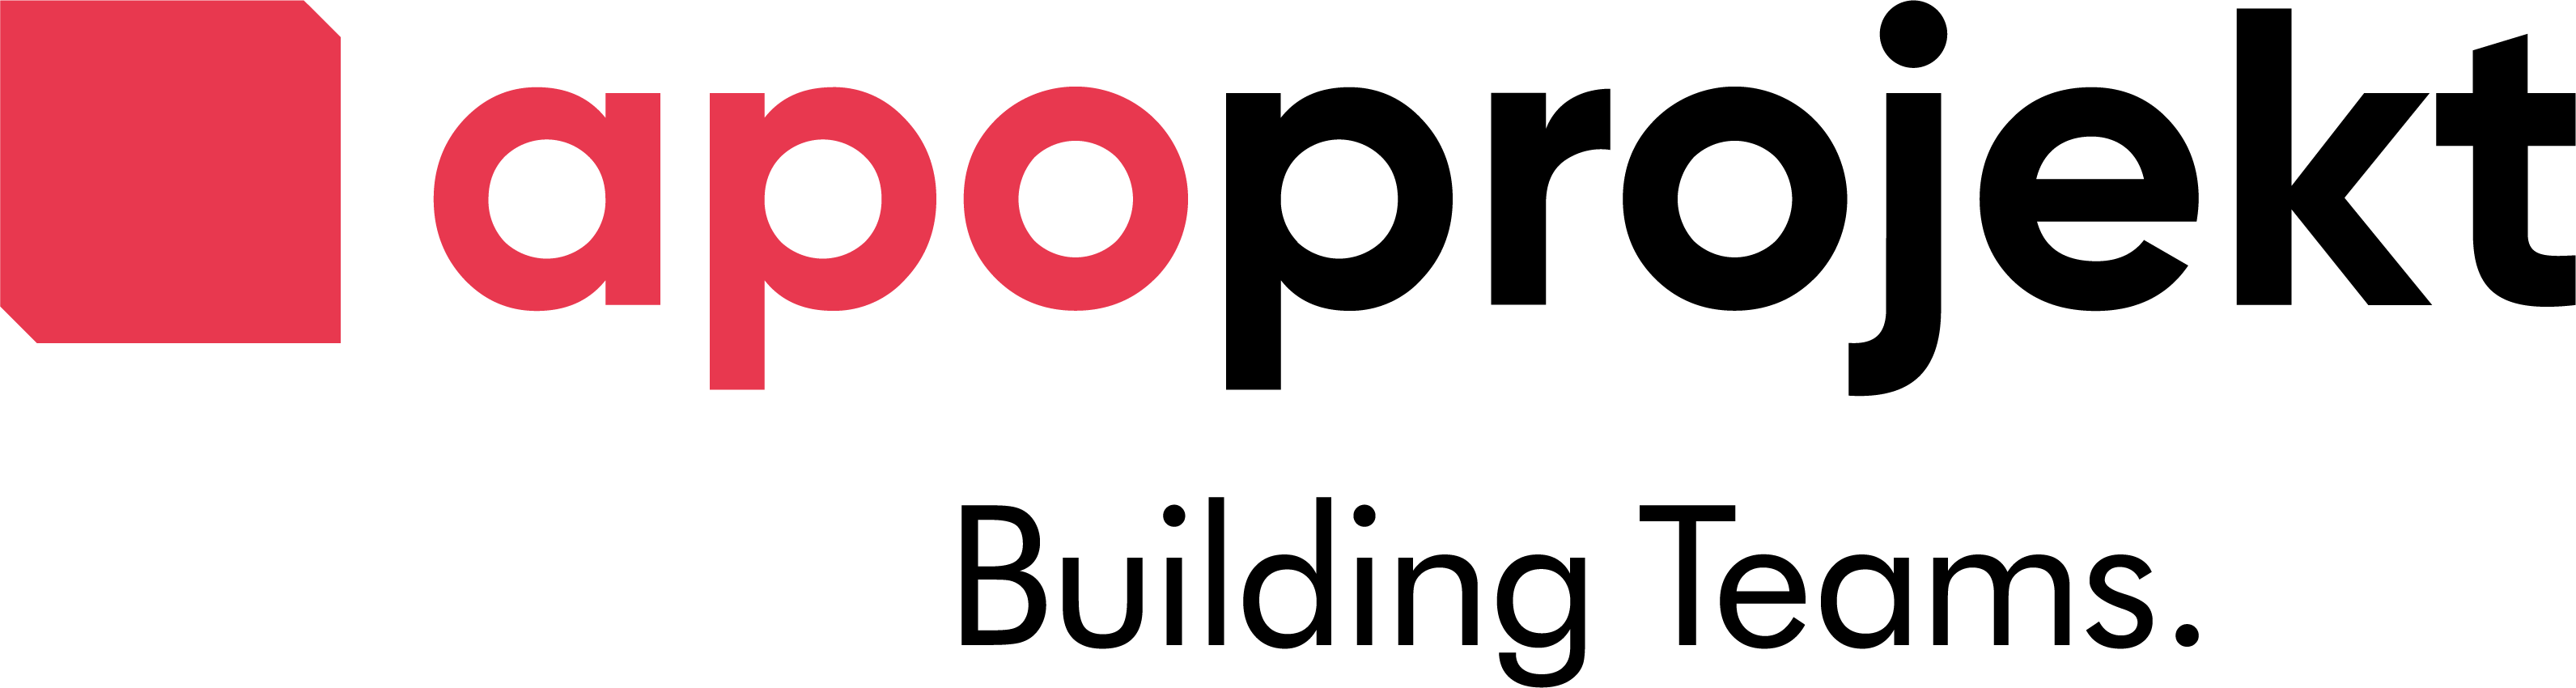 Apoprojekt logo